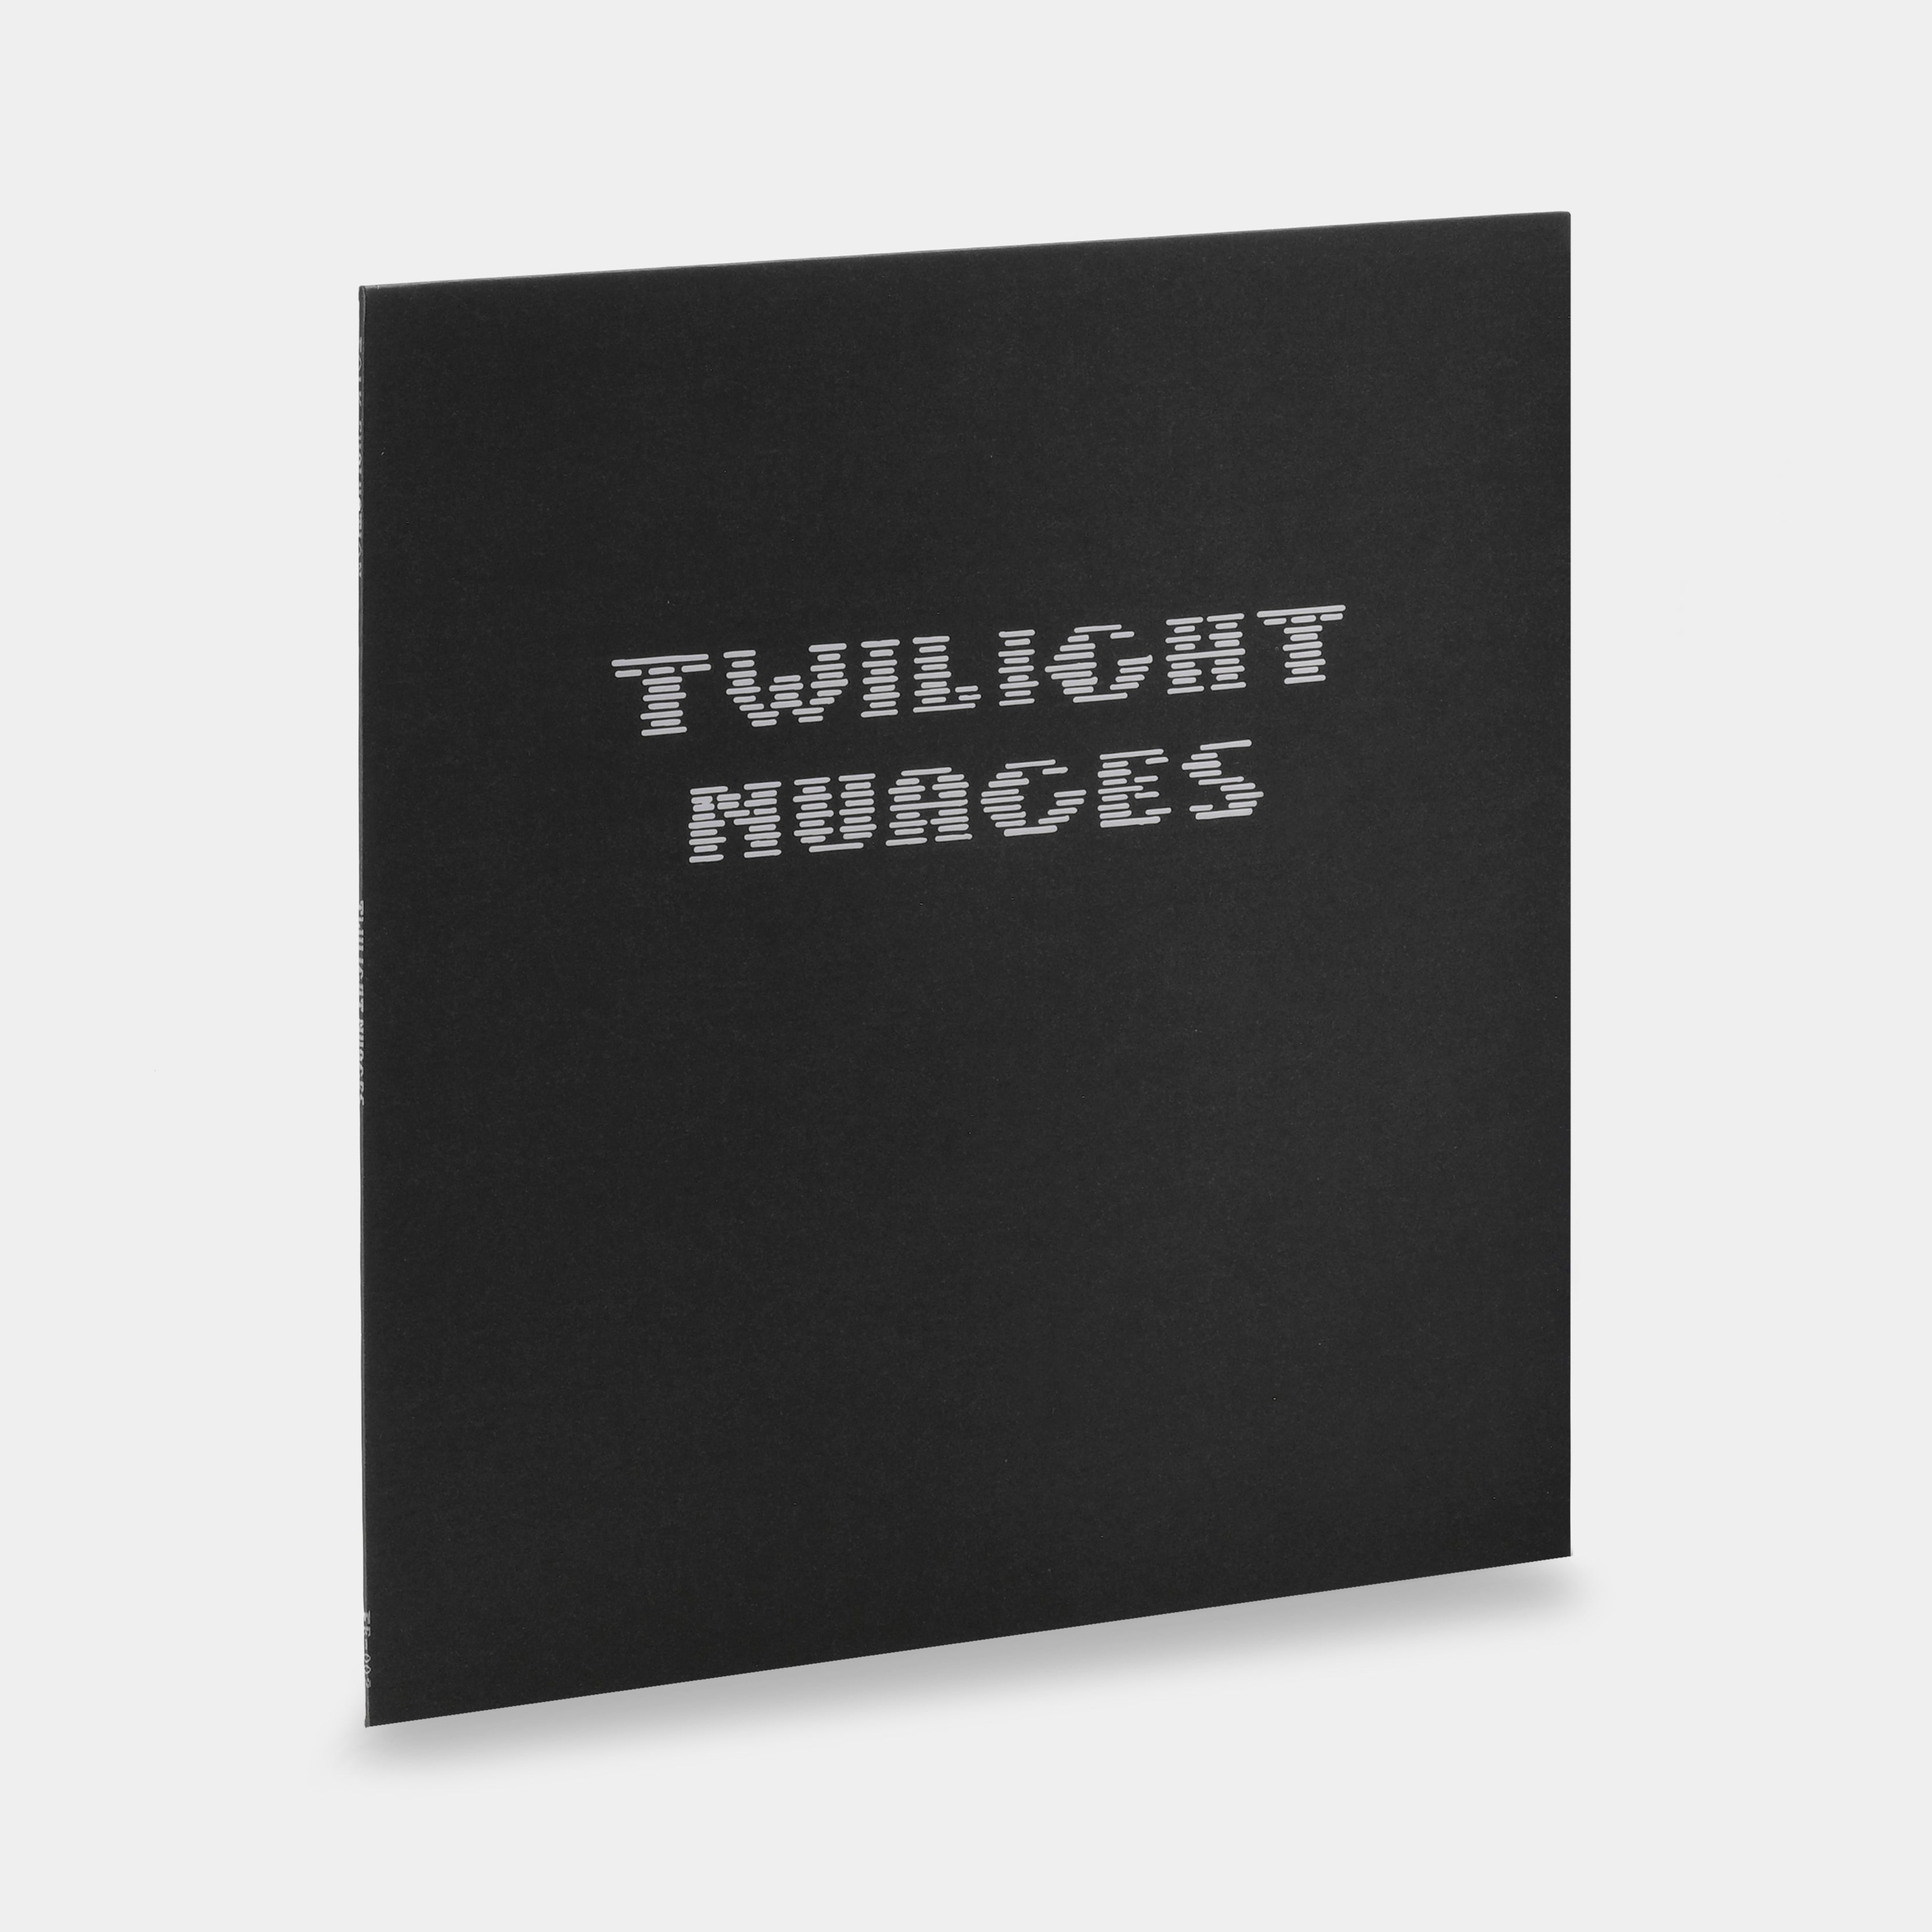 Twilight Nuages - Twilight Nuages Limited Edition LP Dark Blue/Black Swirl Vinyl Record